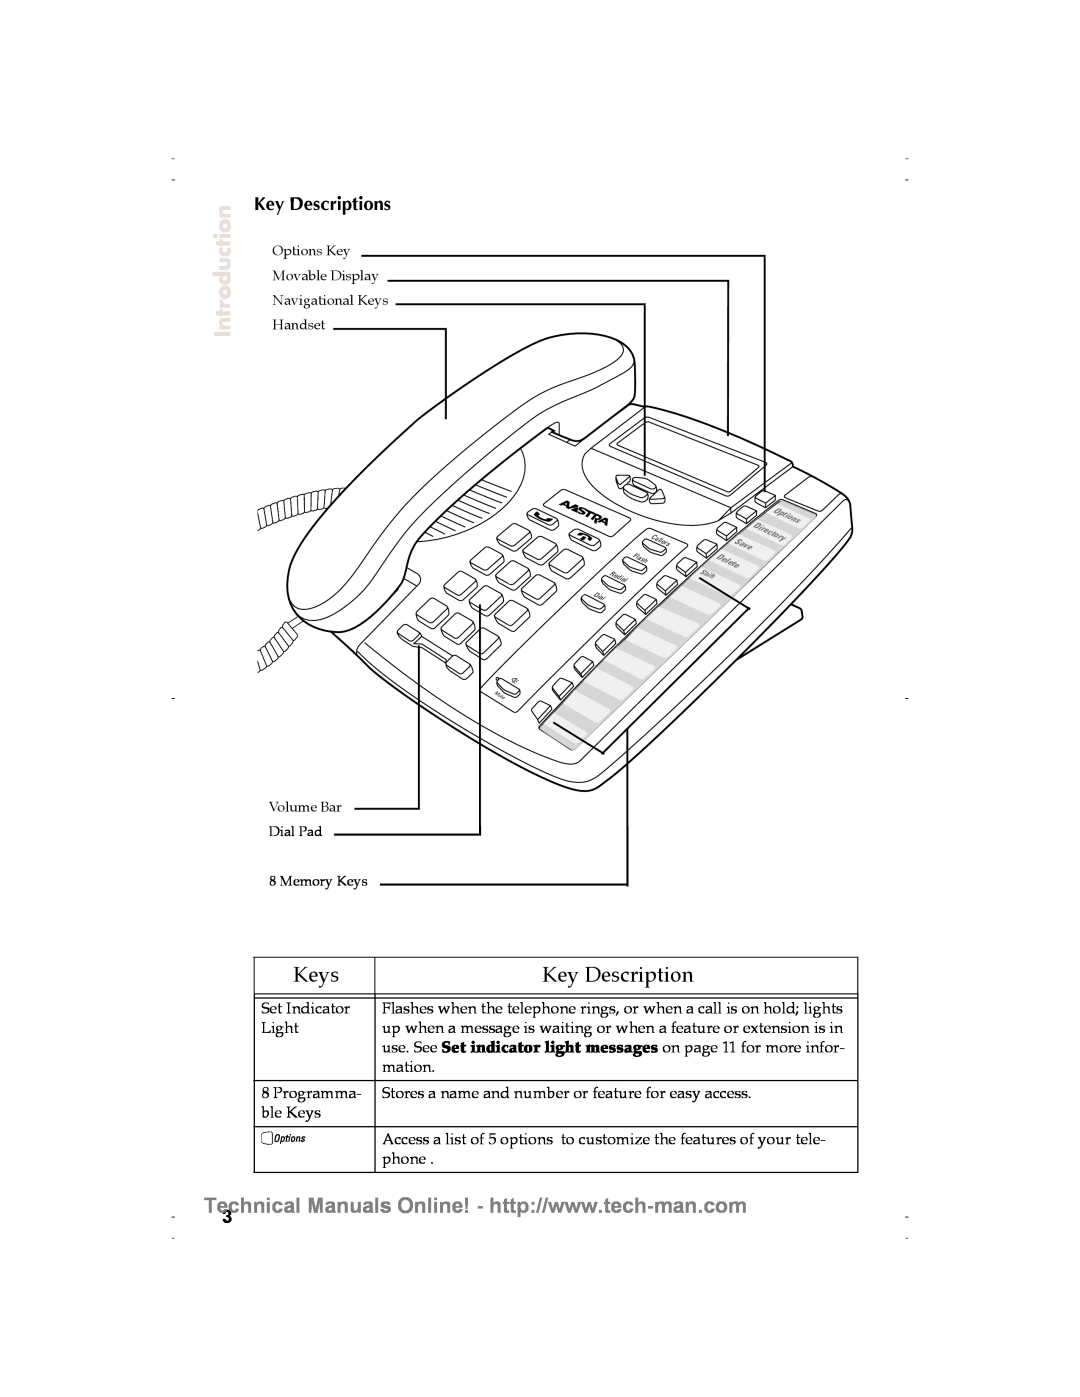 Aastra Telecom 9116 technical manual Keys, Introduction, Key Descriptions 